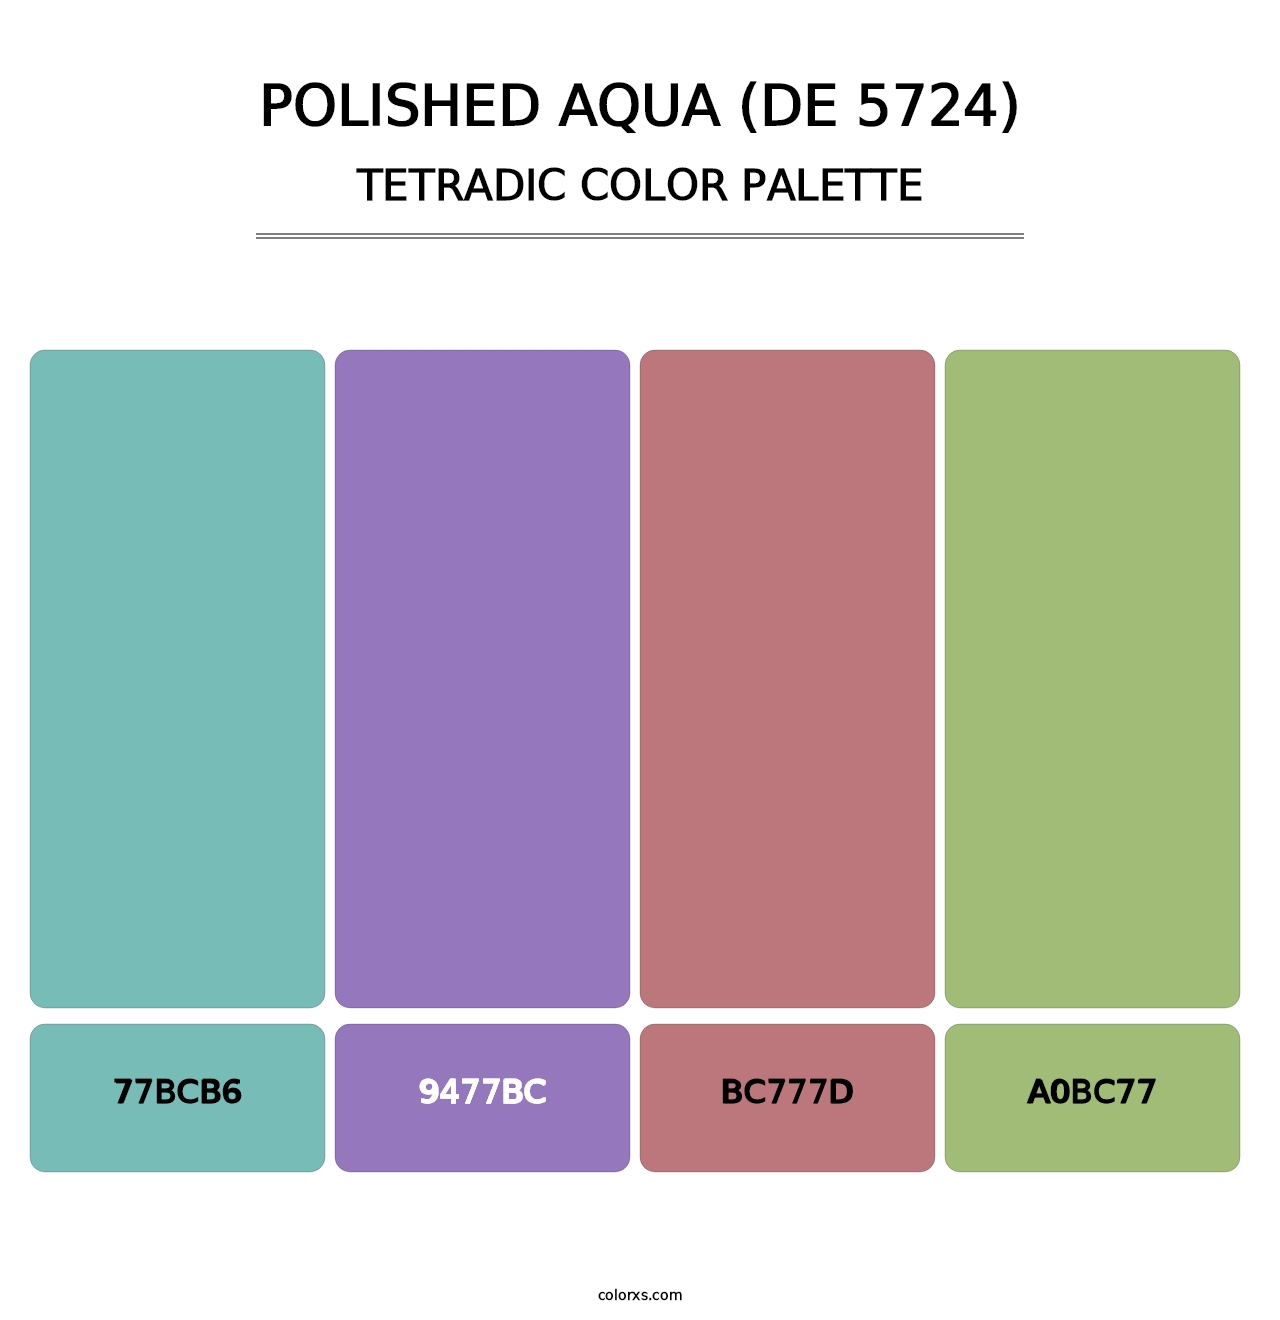 Polished Aqua (DE 5724) - Tetradic Color Palette